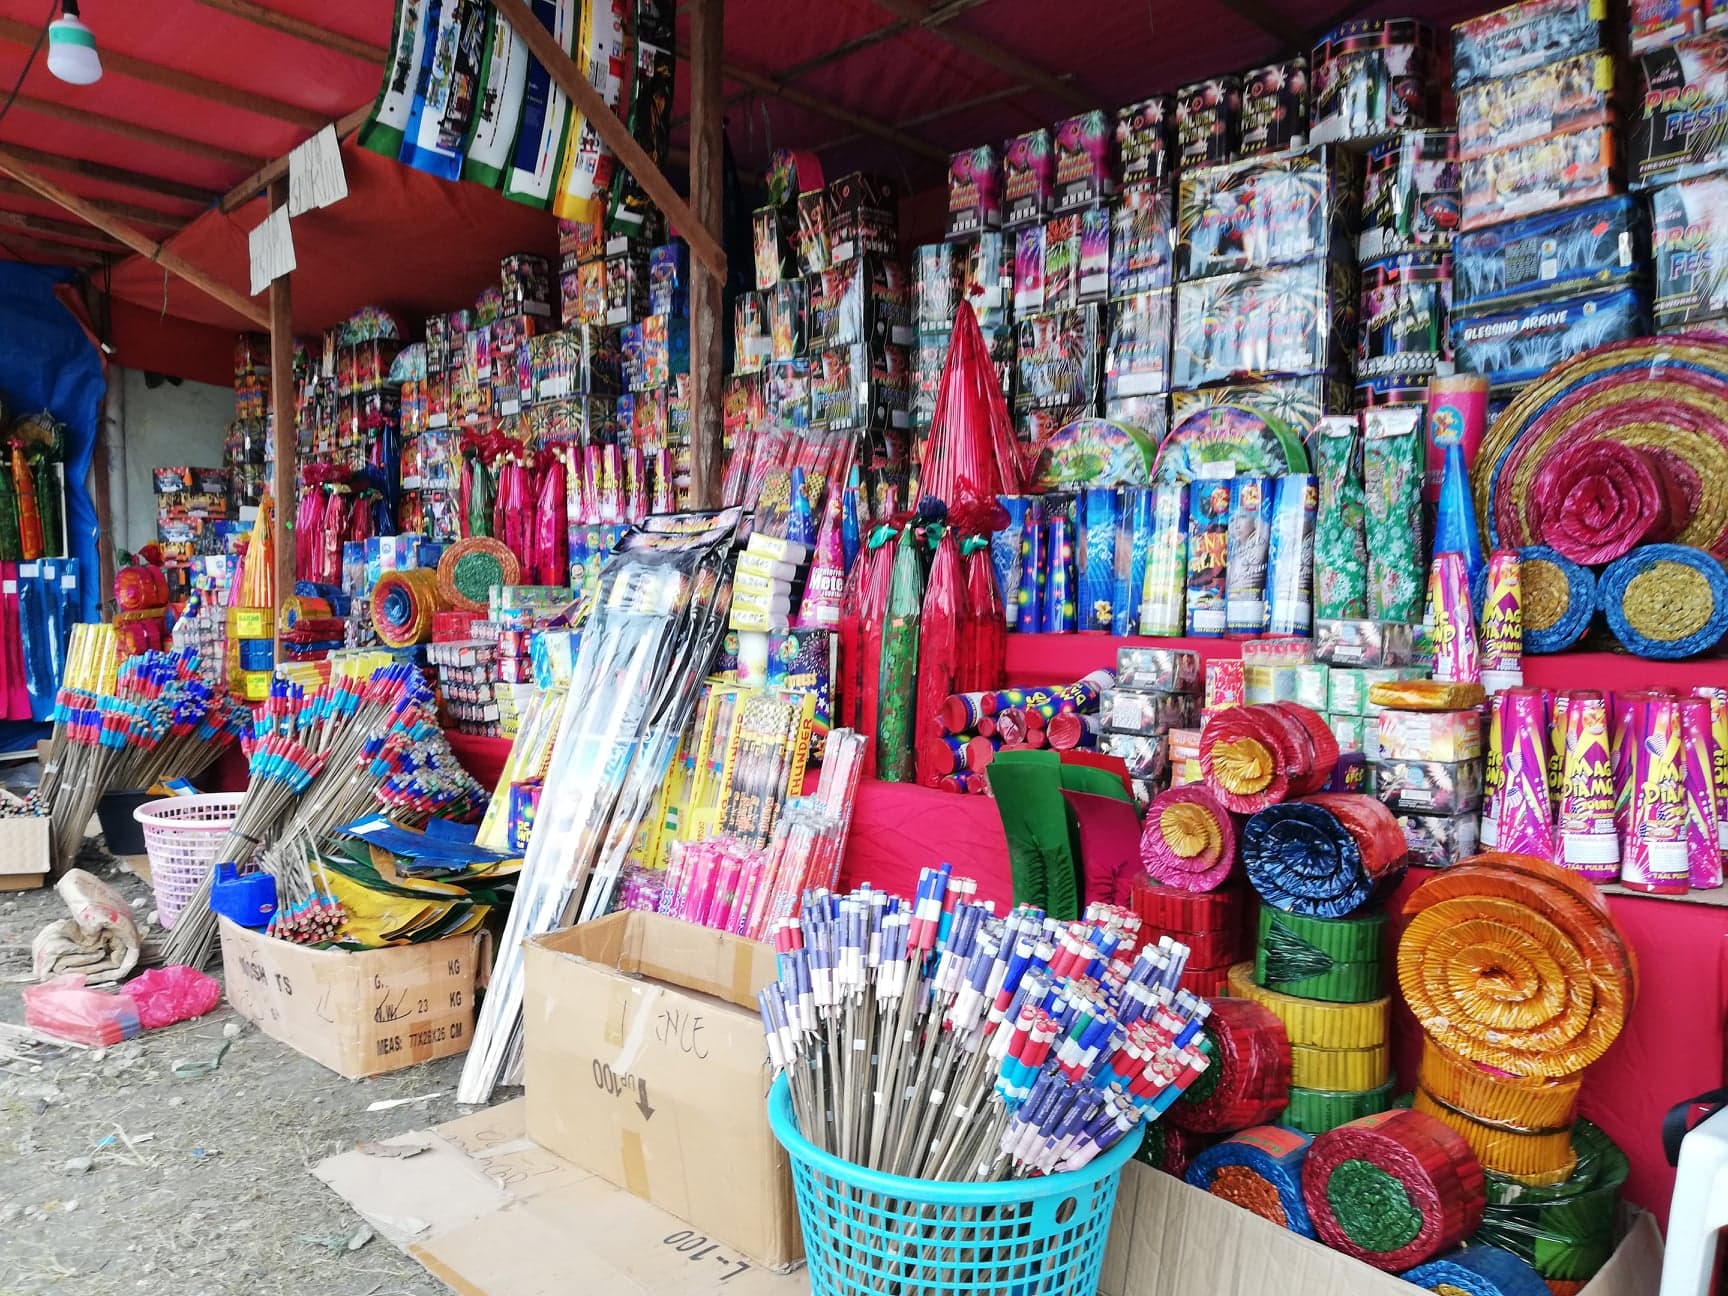 Firecracker vendors in Tagbilaran City enjoy brisk sales